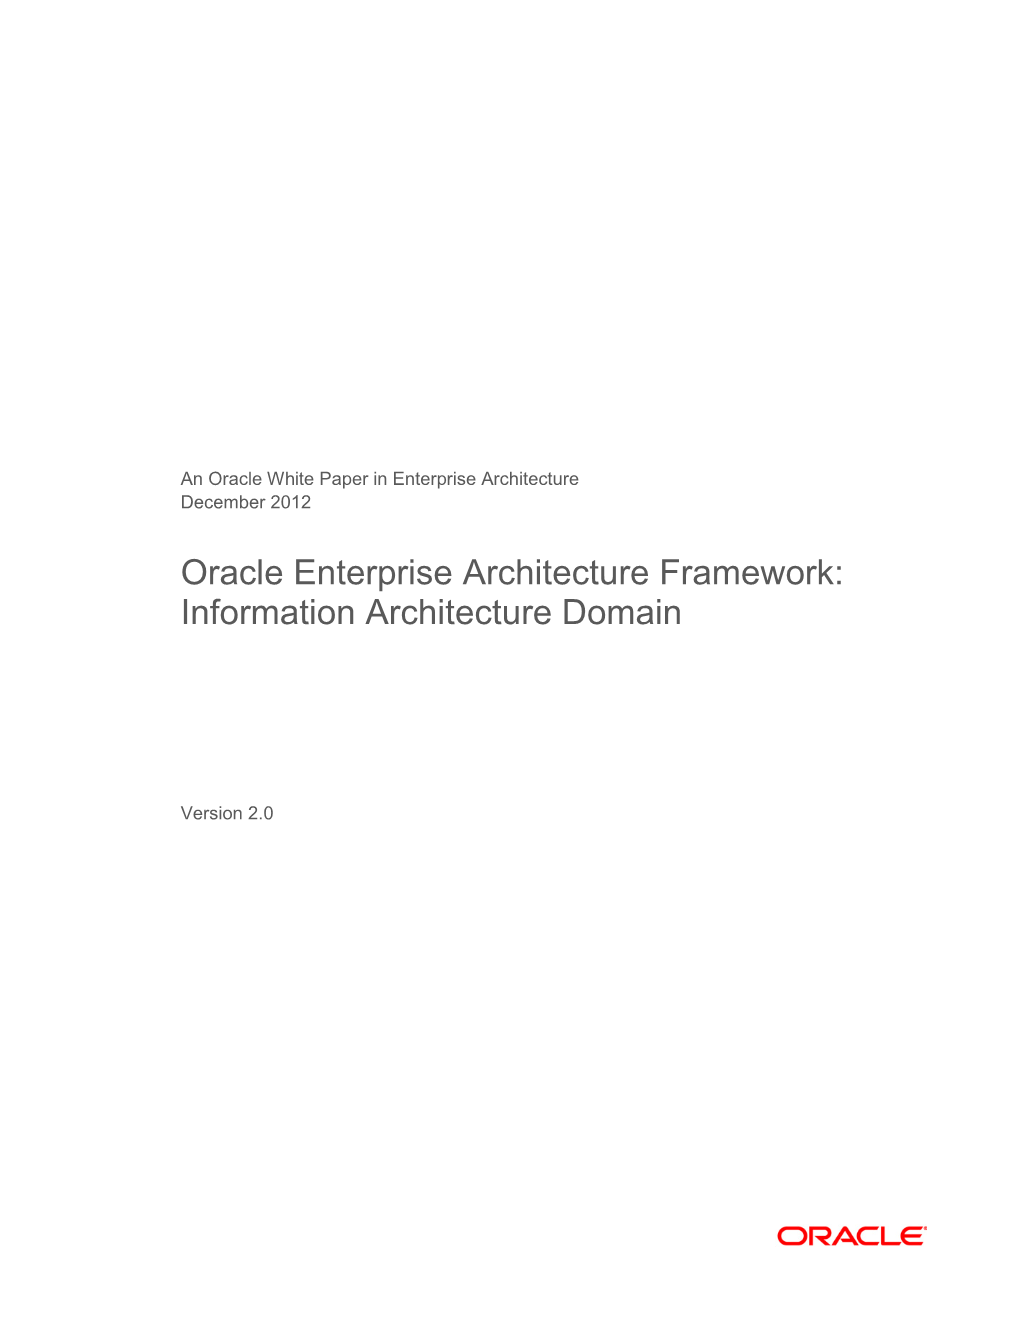 Oracle Enterprise Architecture Framework: Information Architecture Domain